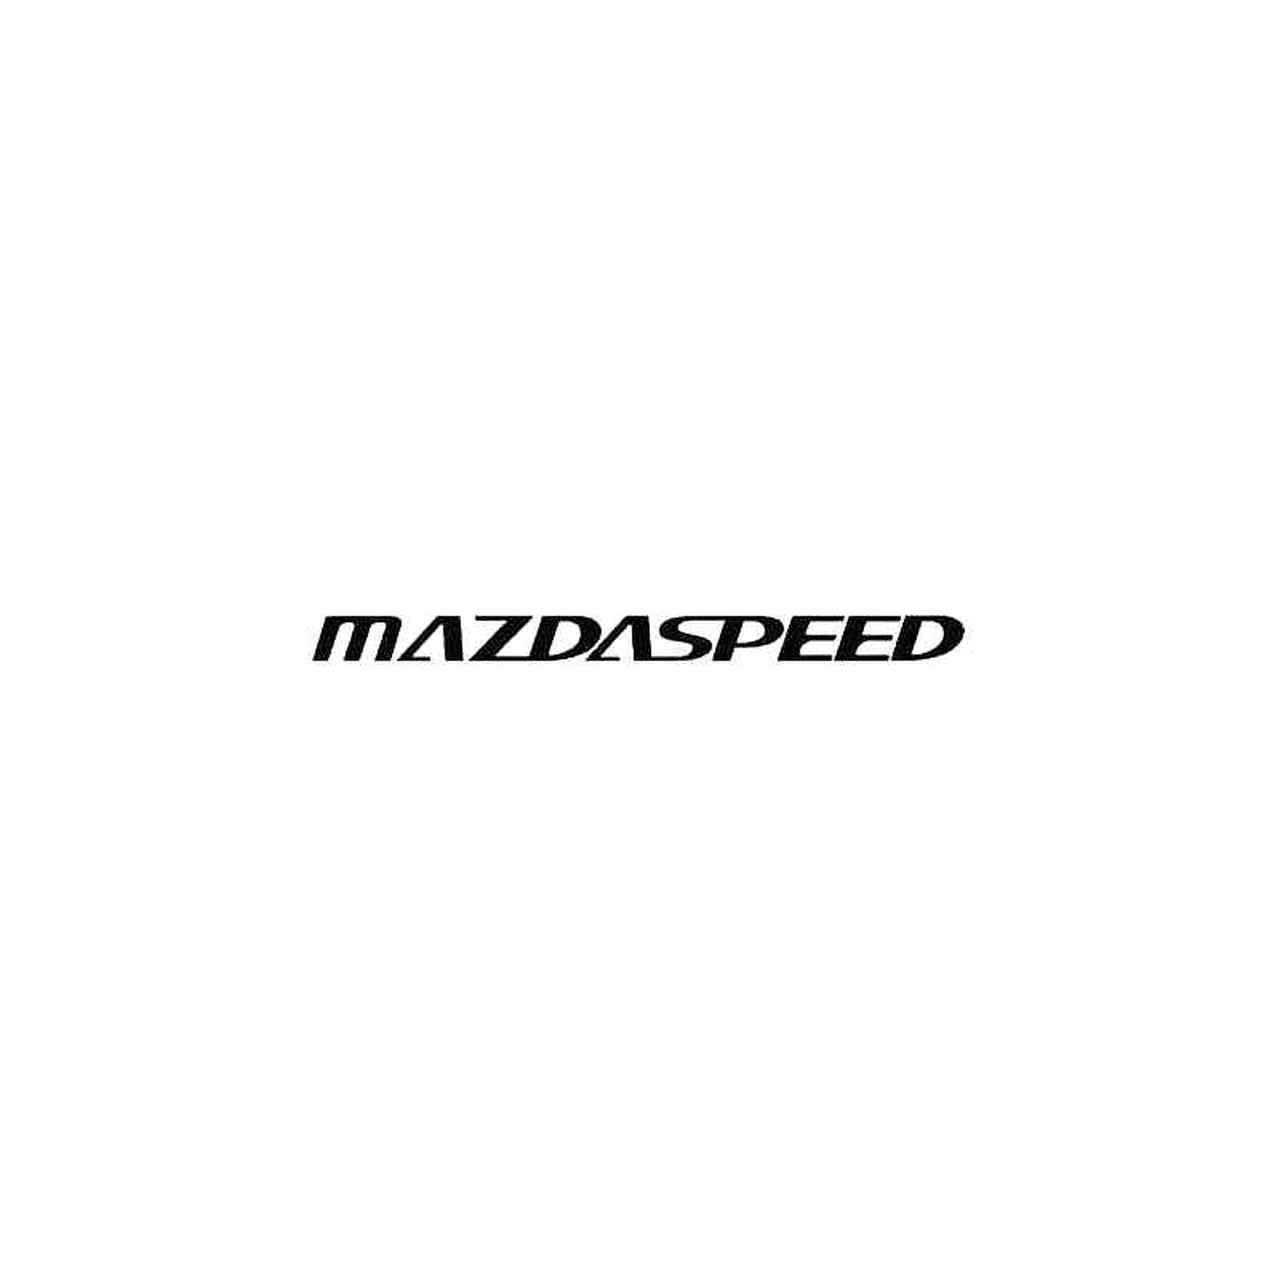 Mazdaspeed Logo - Mazdaspeed Decal